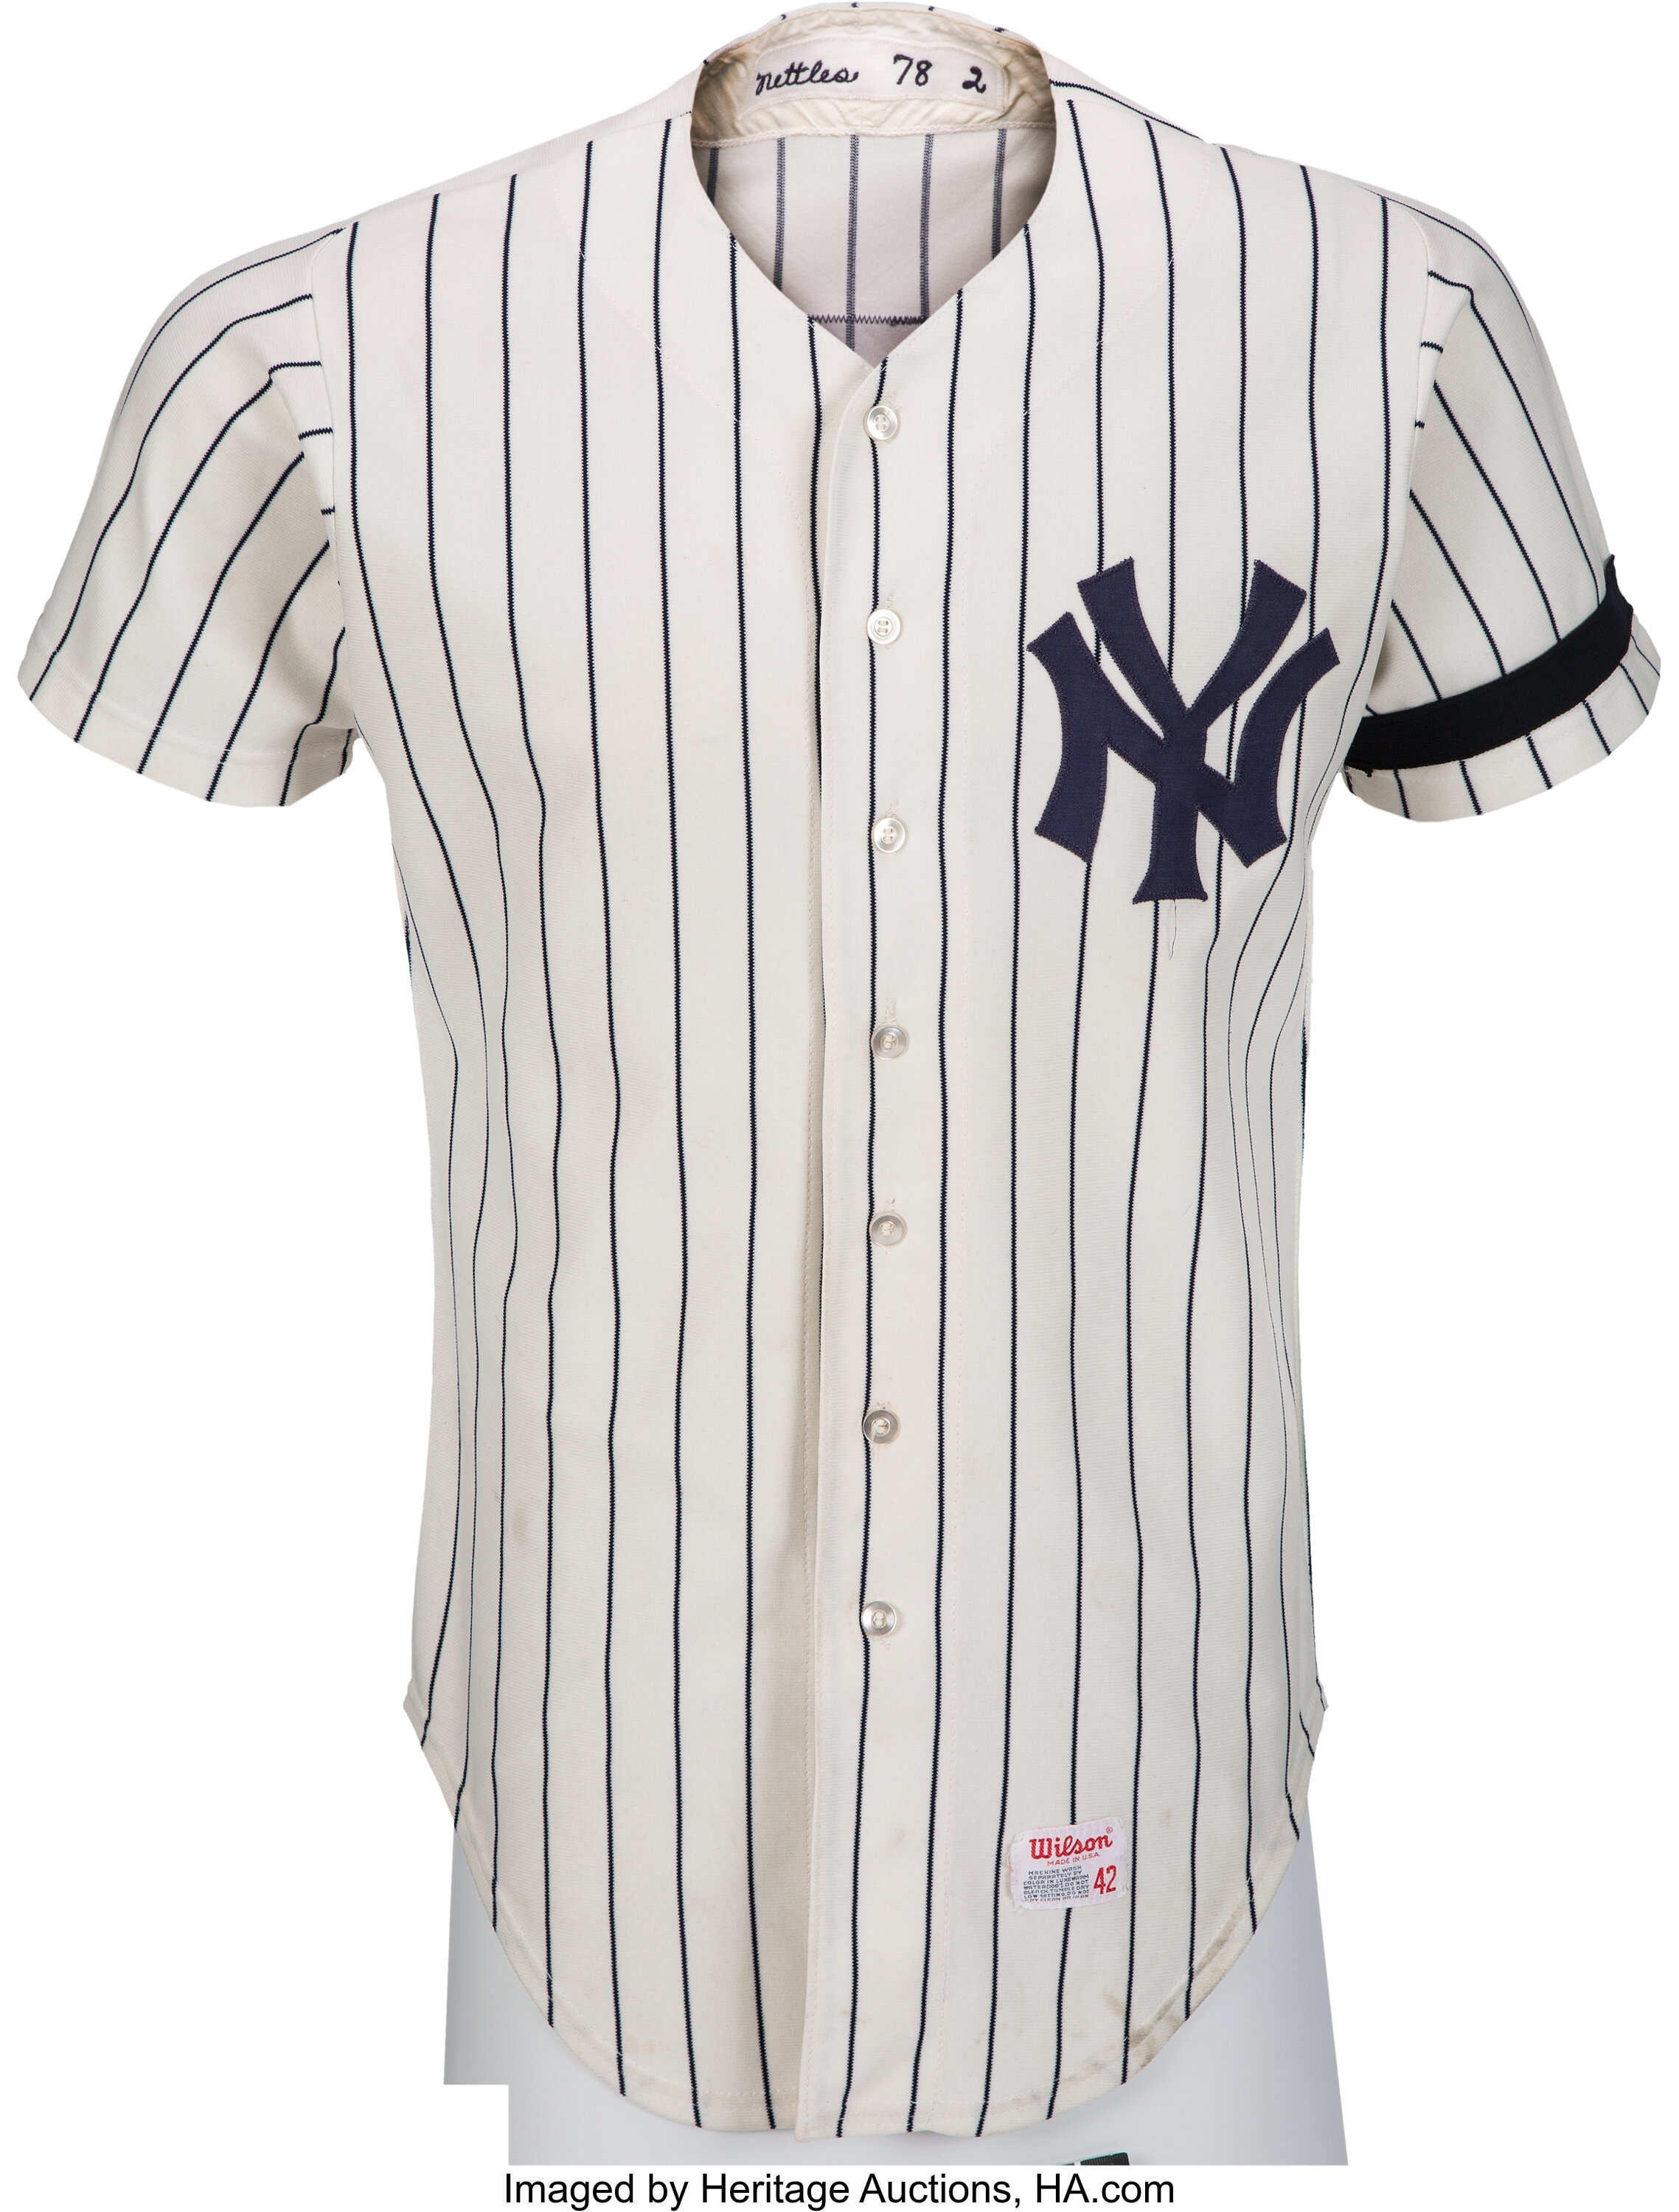 Graig Nettles New York Yankees Signed Autographed Gray Custom Jersey –